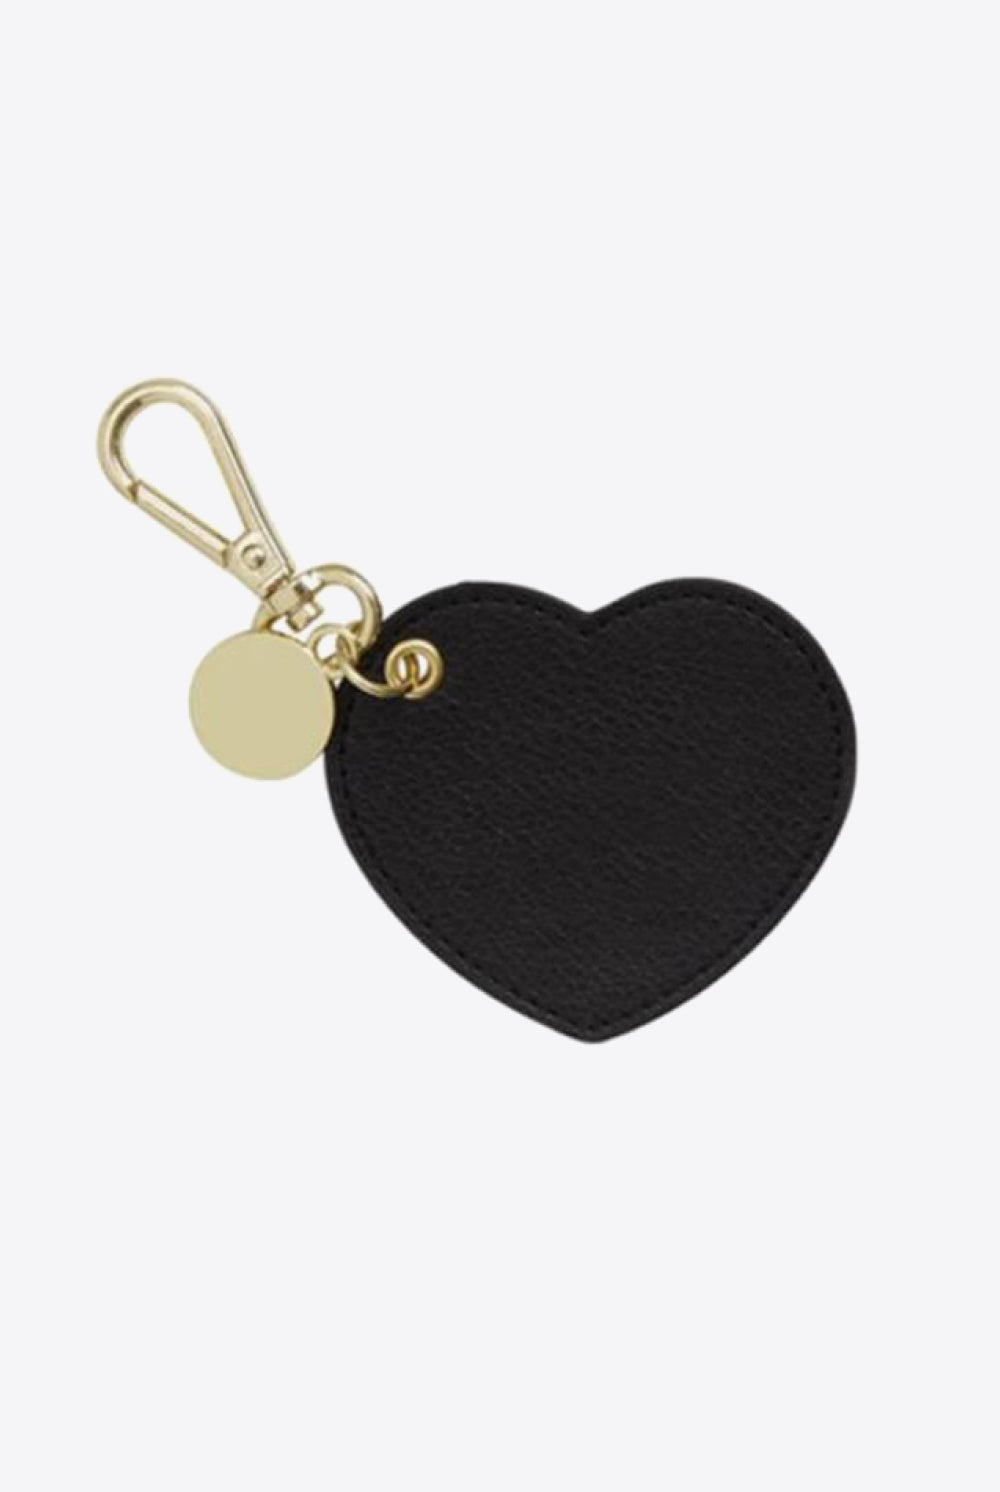 White Smoke Assorted 4-Pack Heart Shape PU Leather Keychain Key Chains